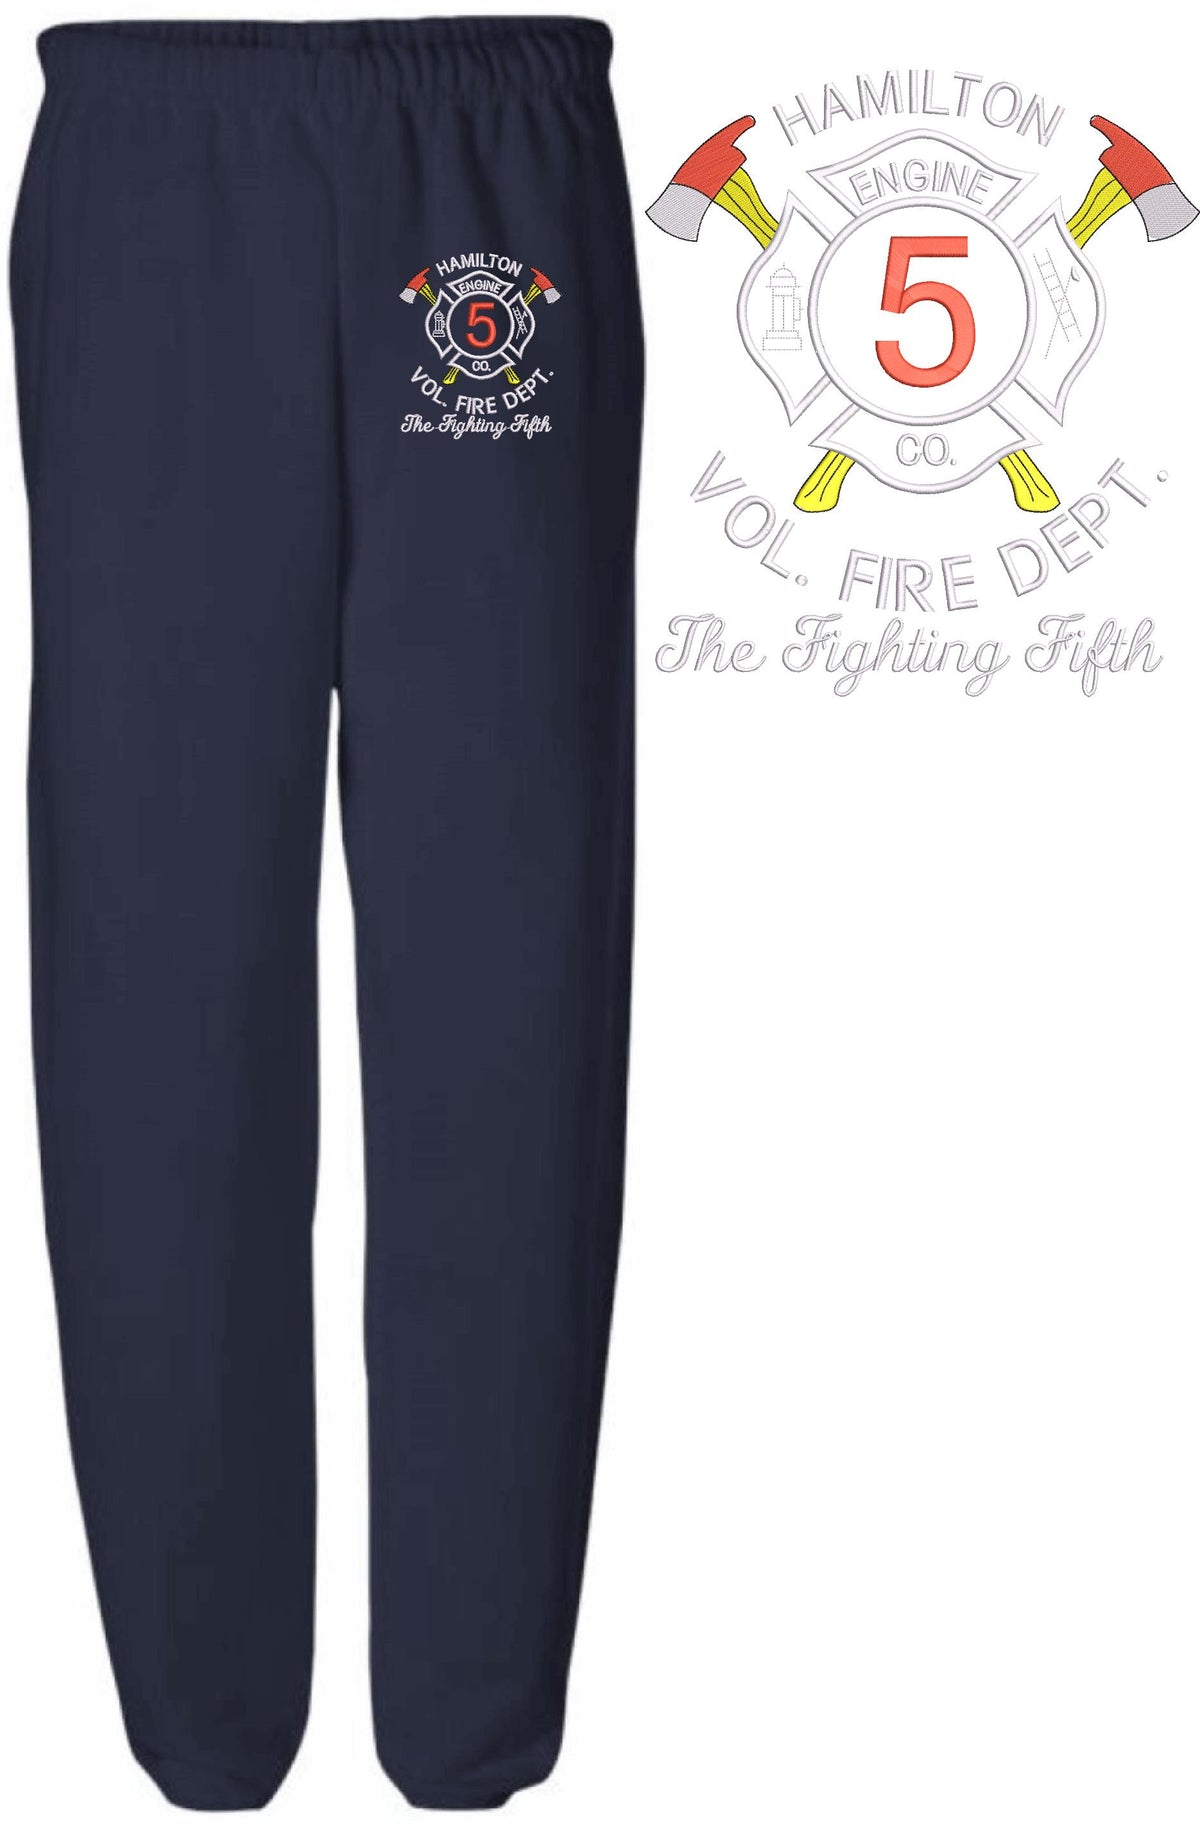 Hamilton Vol. Fire Dept Embroidered Sweatpants - Powercall Sirens LLC